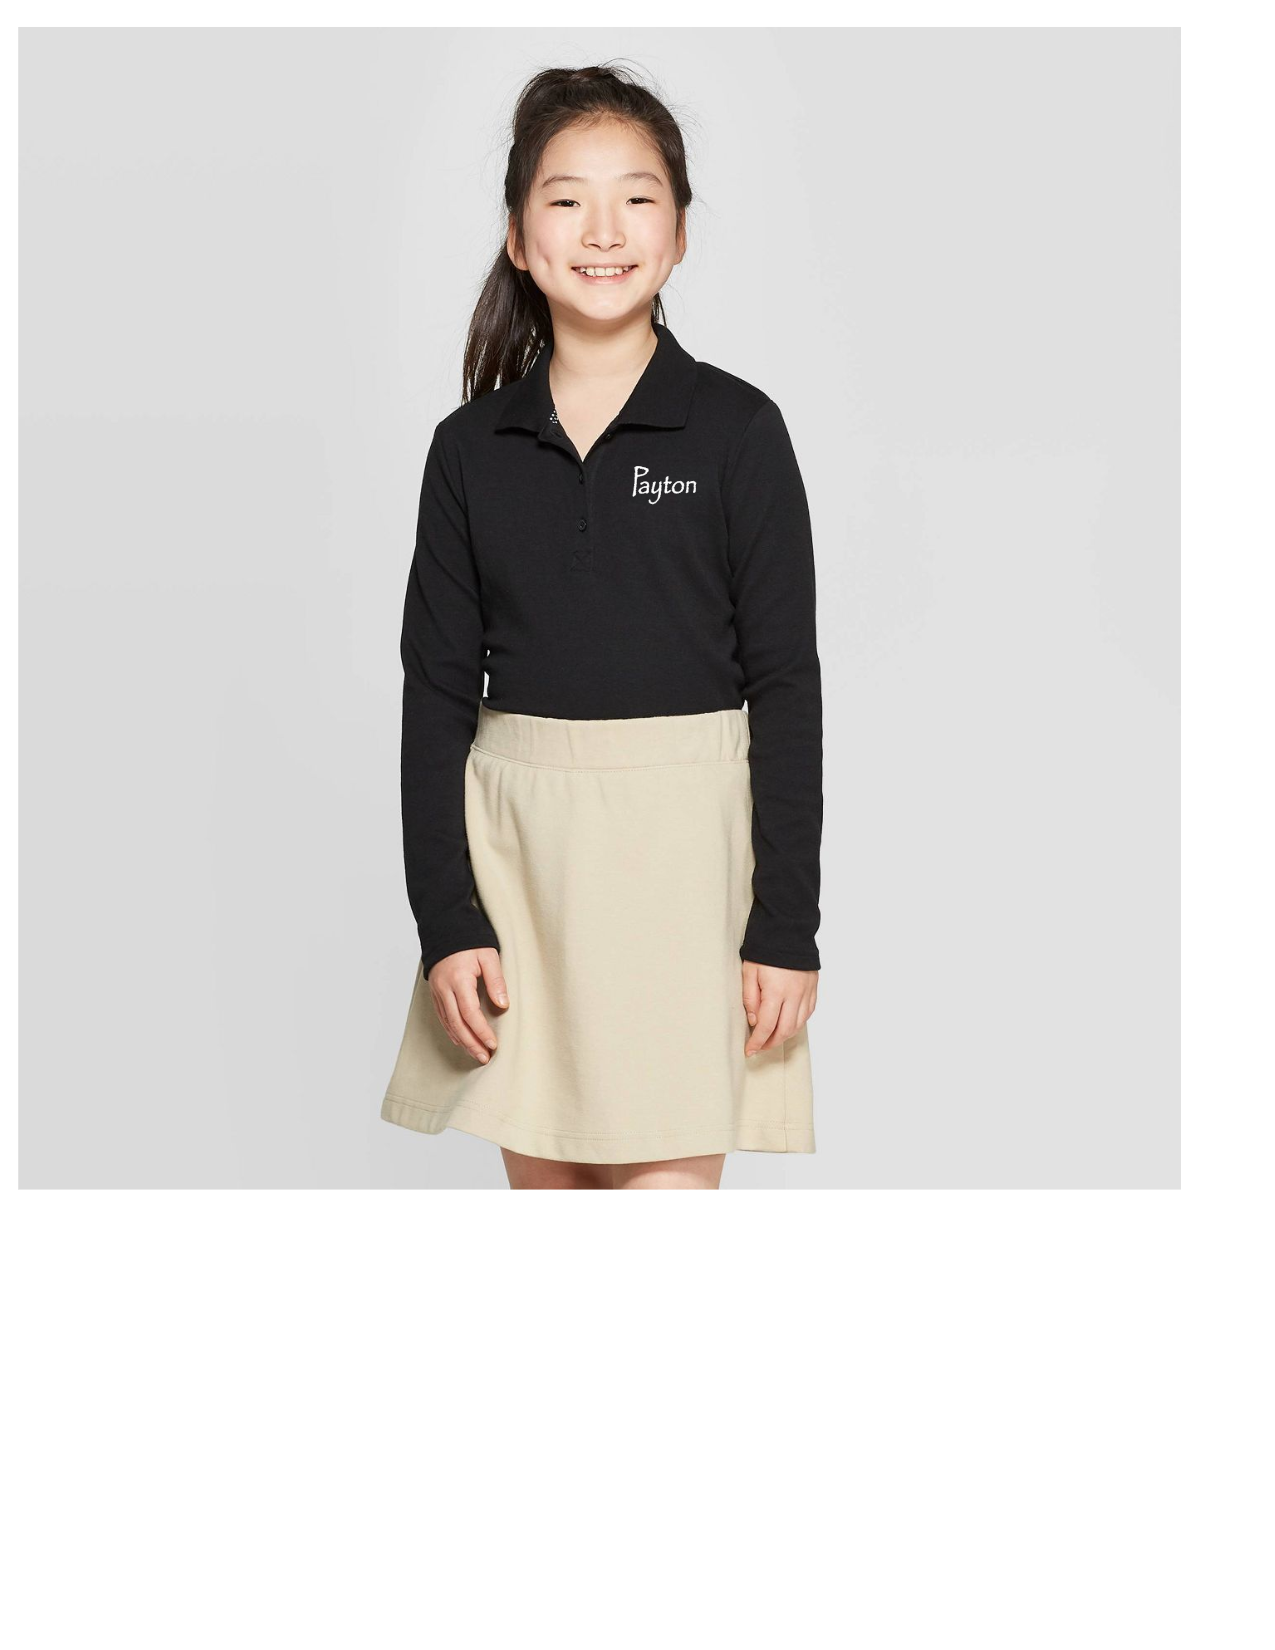 Seeds Academy Uniform- Girls Long sleeve Polo (black)